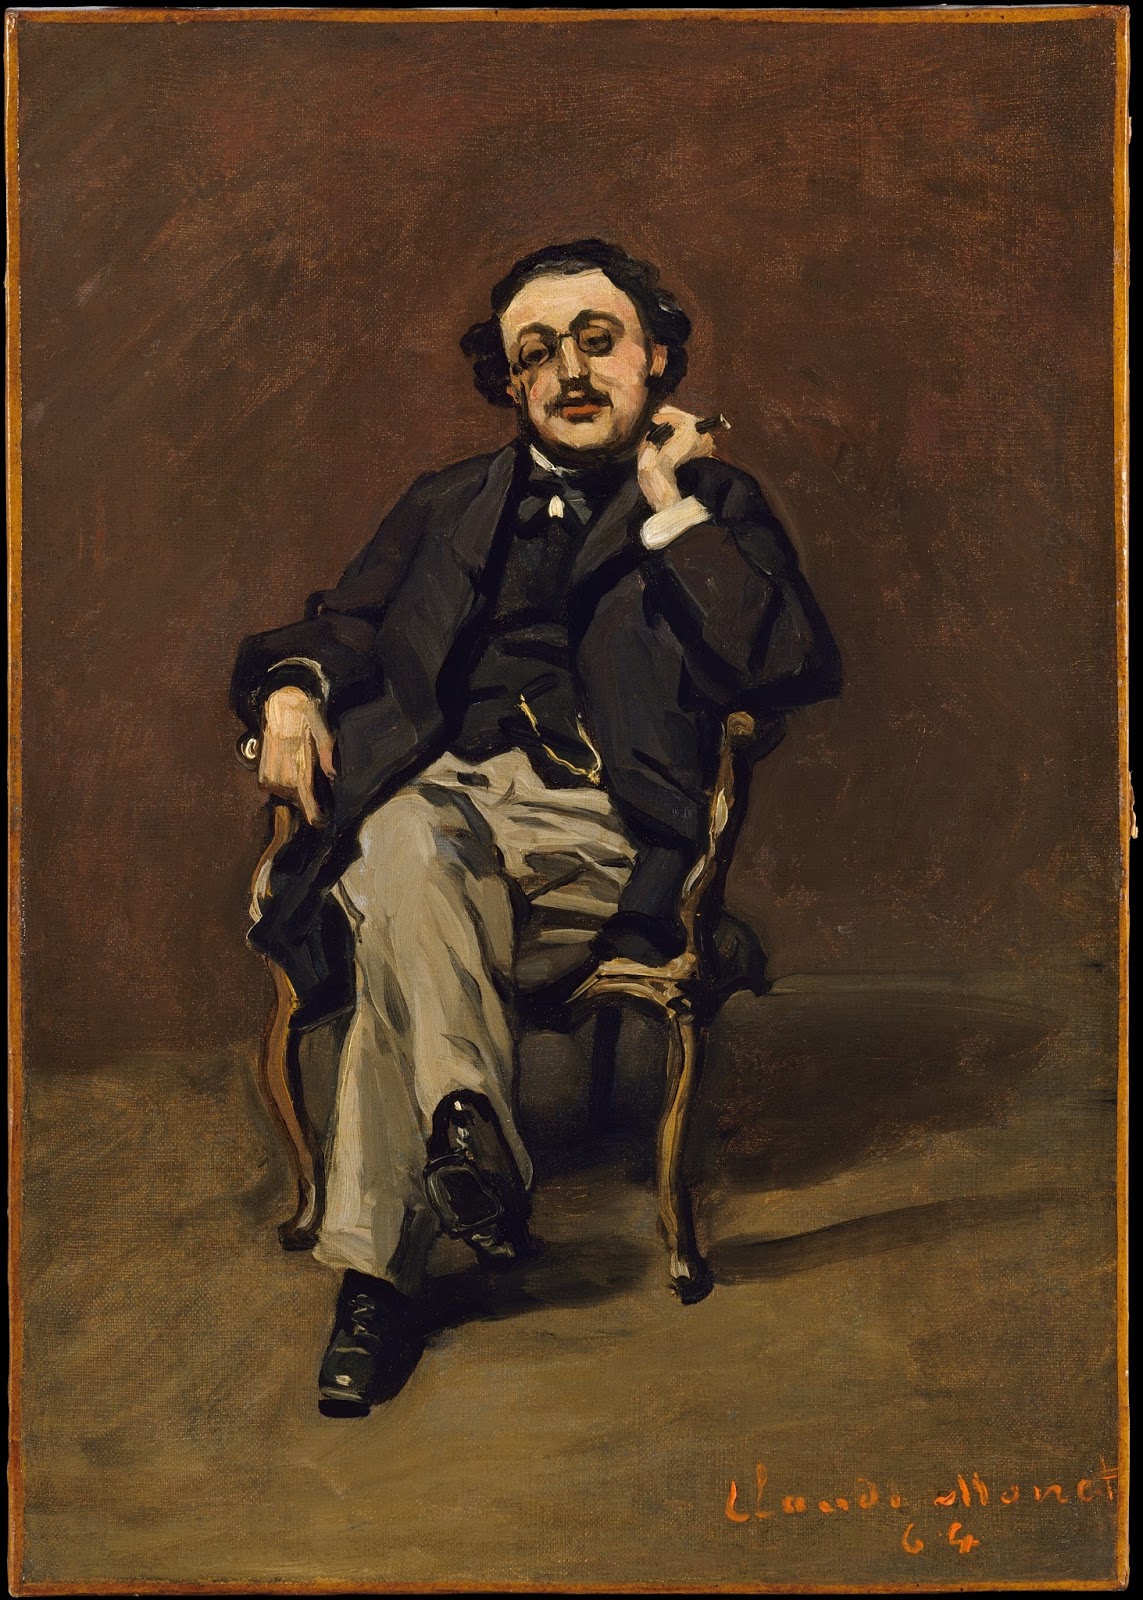 Claude+Monet-1840-1926 (206).jpg